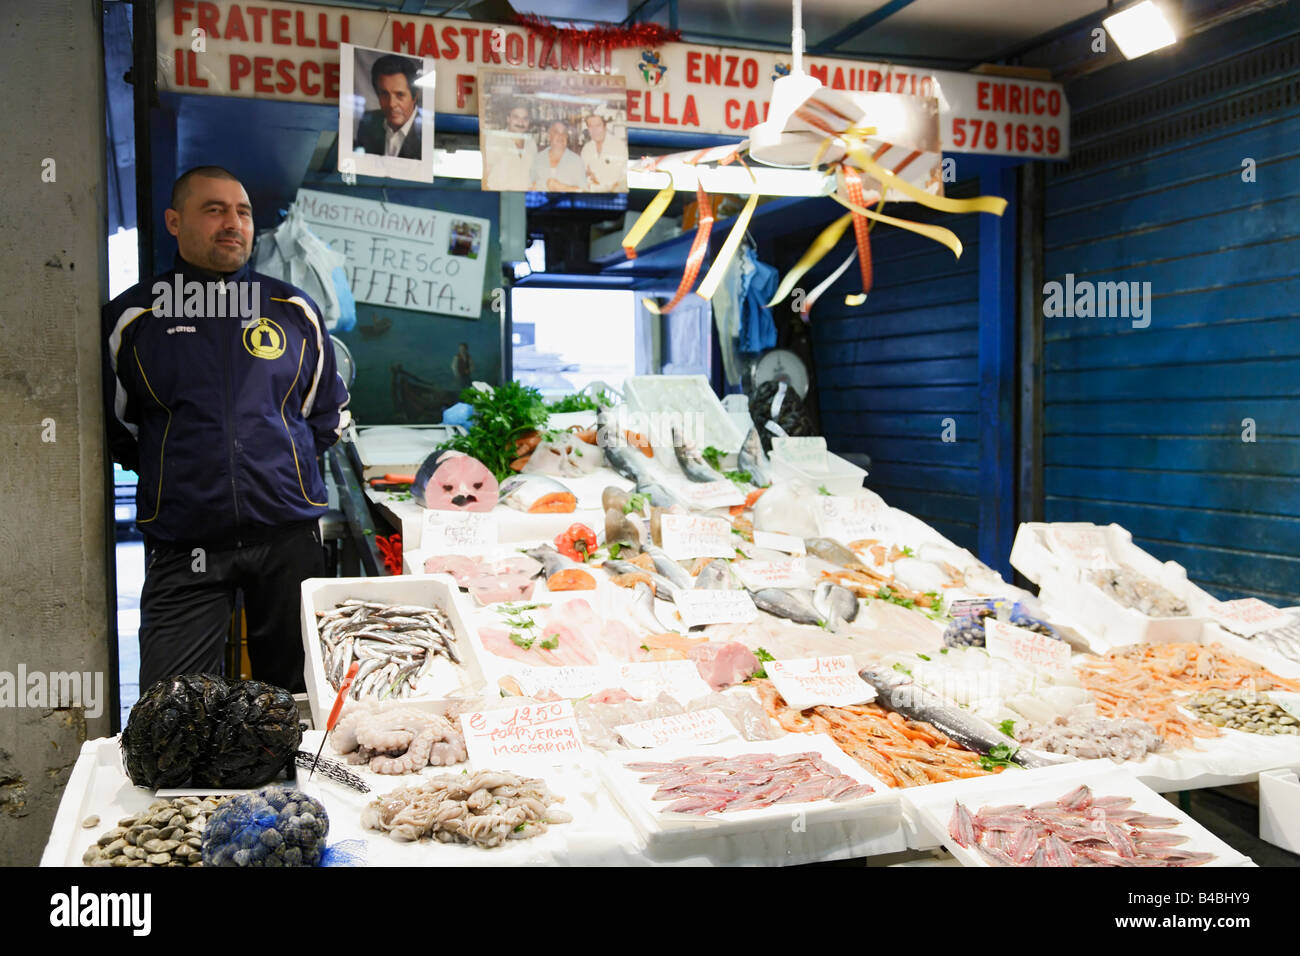 Fish stall in market hall Testaccio Owner is Enzo Mastroianni Family Rome Italy Stock Photo